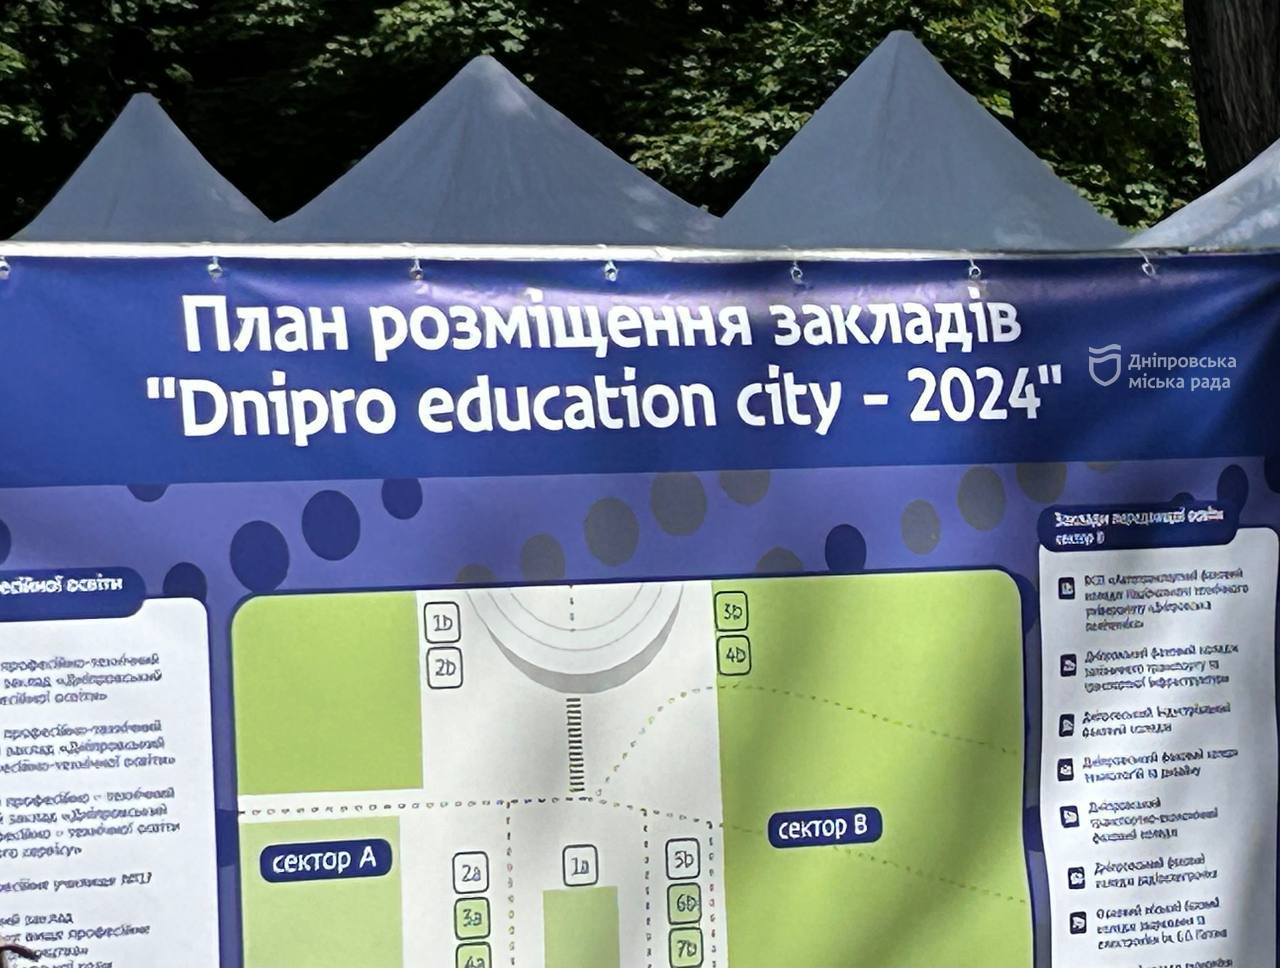      45  .      Dnipro Education City 2024